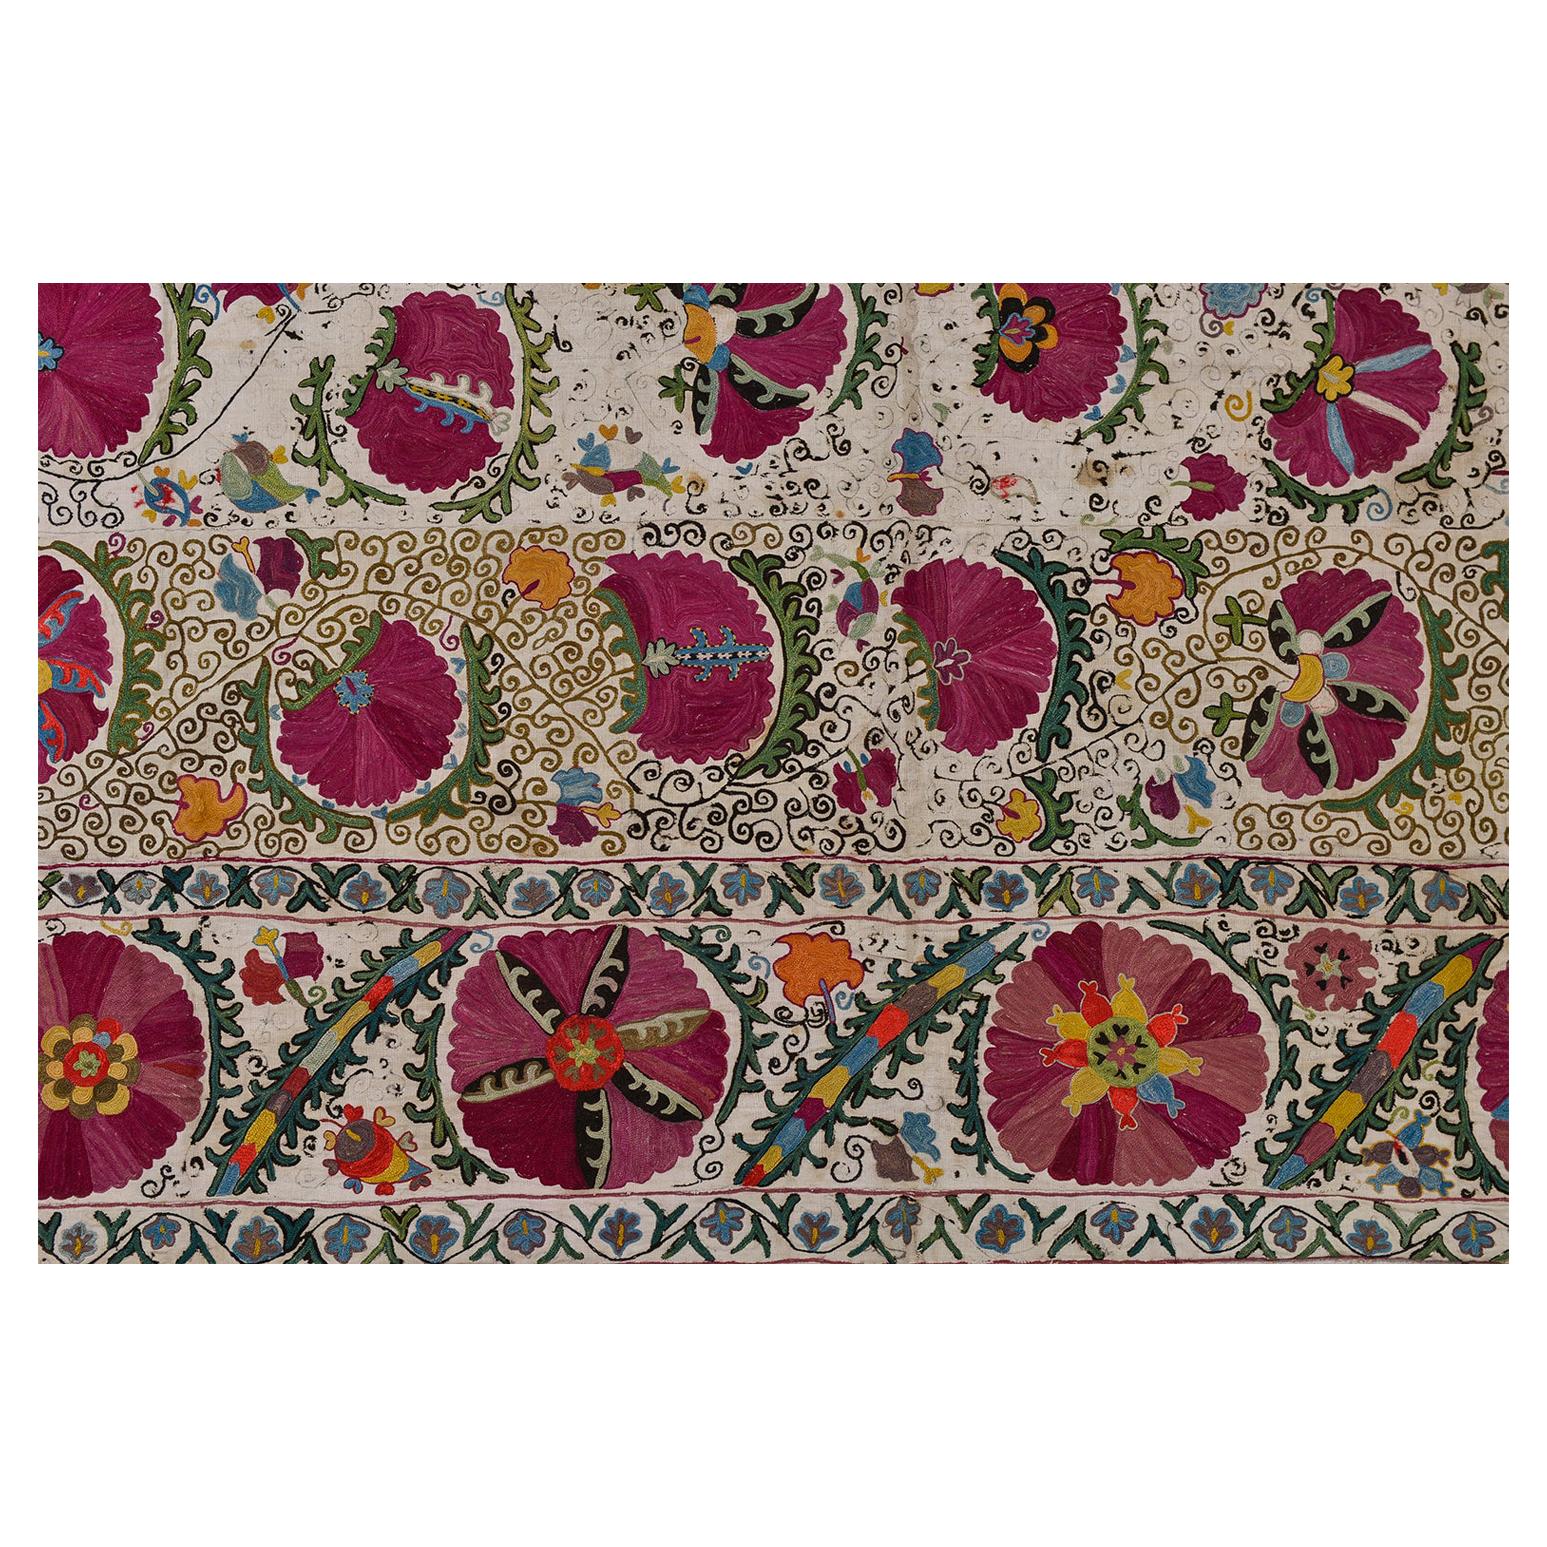  Rare Silk Embroidered Antique Suzani from Private Collection